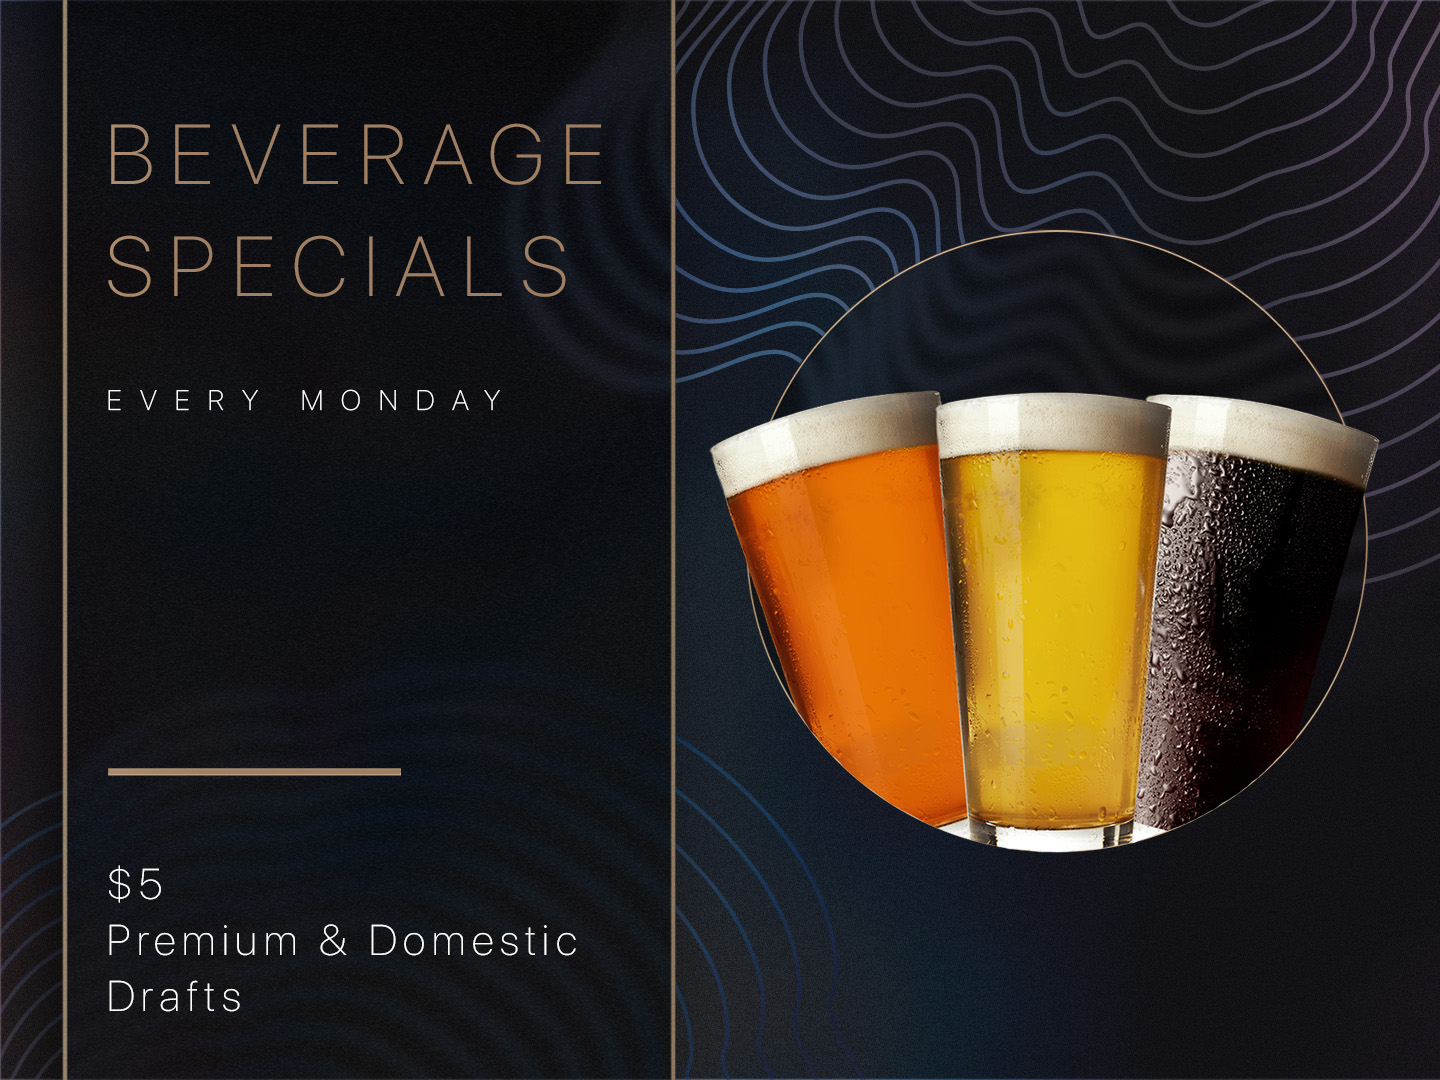 Beverage Specials. Every Monday. $5 Premium & Domestic Drafts